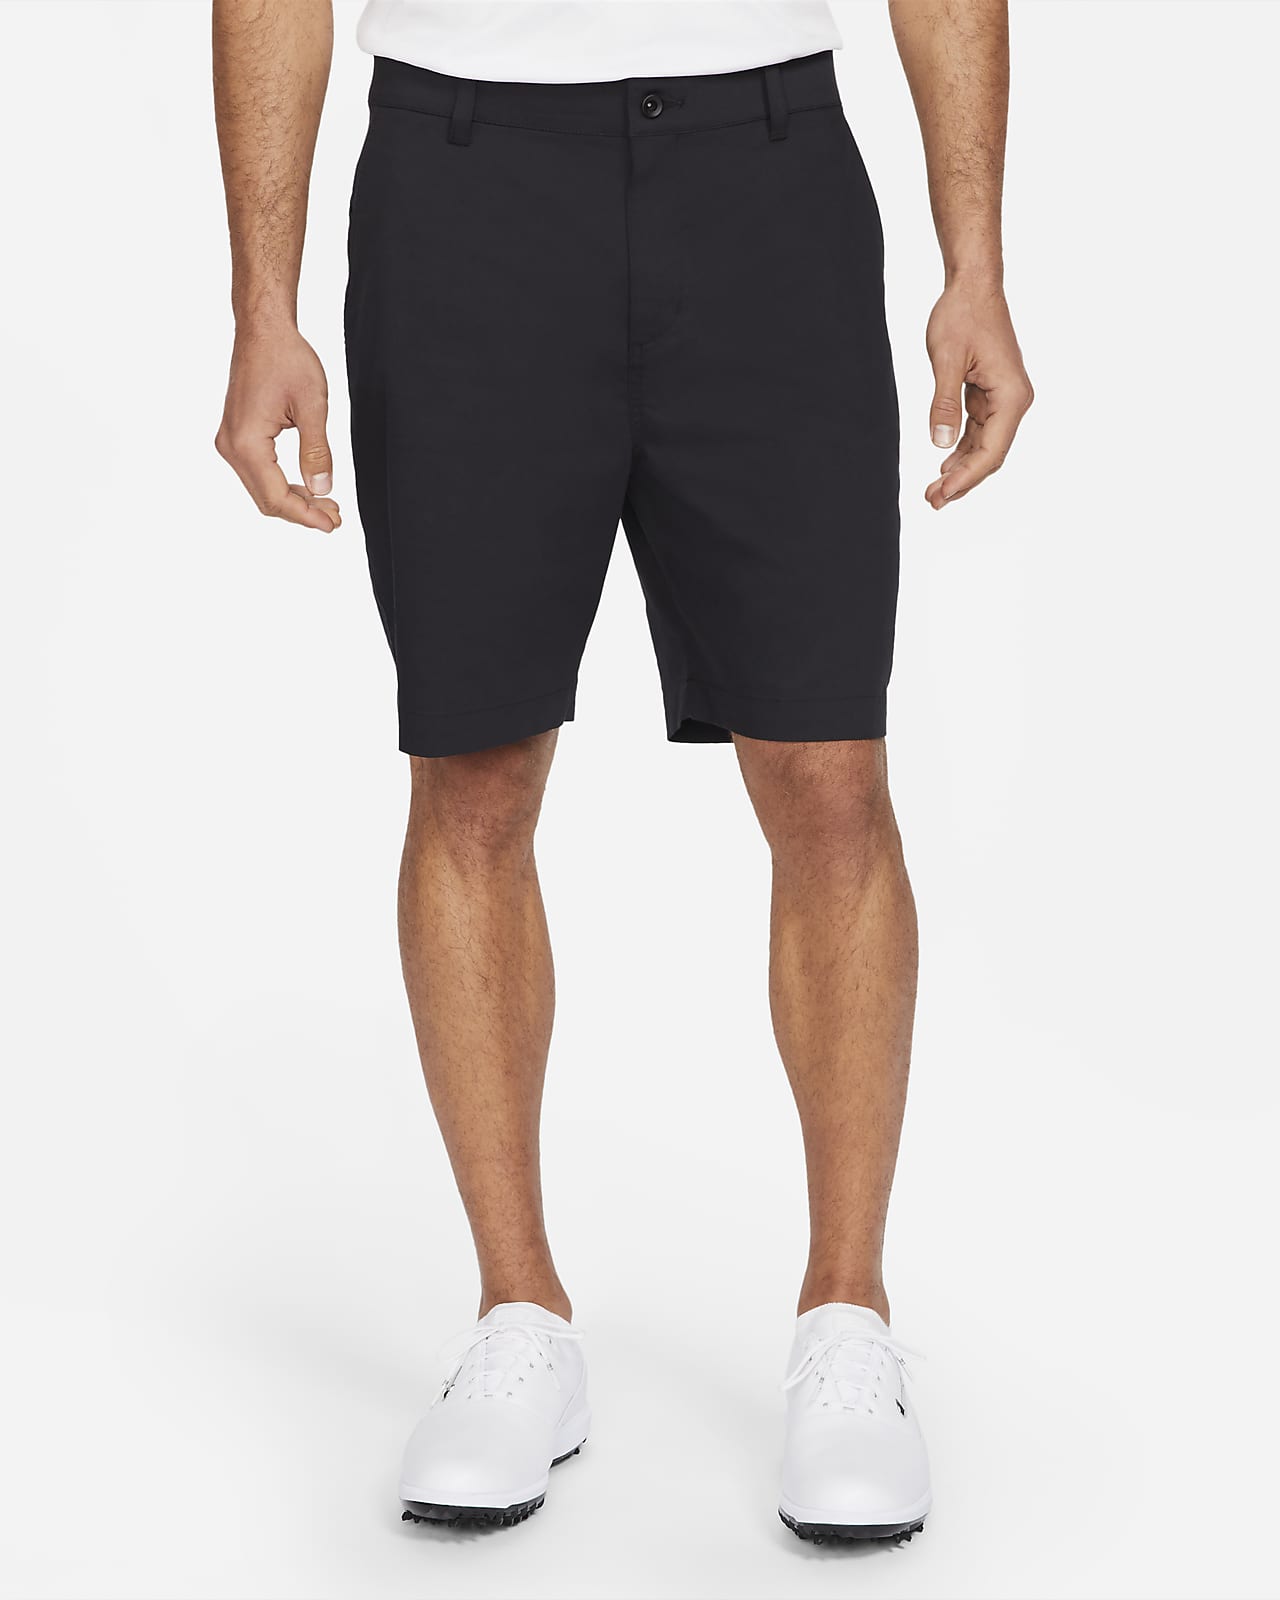 Nike Dri-FIT UV Men's 23cm (approx.) Golf Chino Shorts. Nike LU